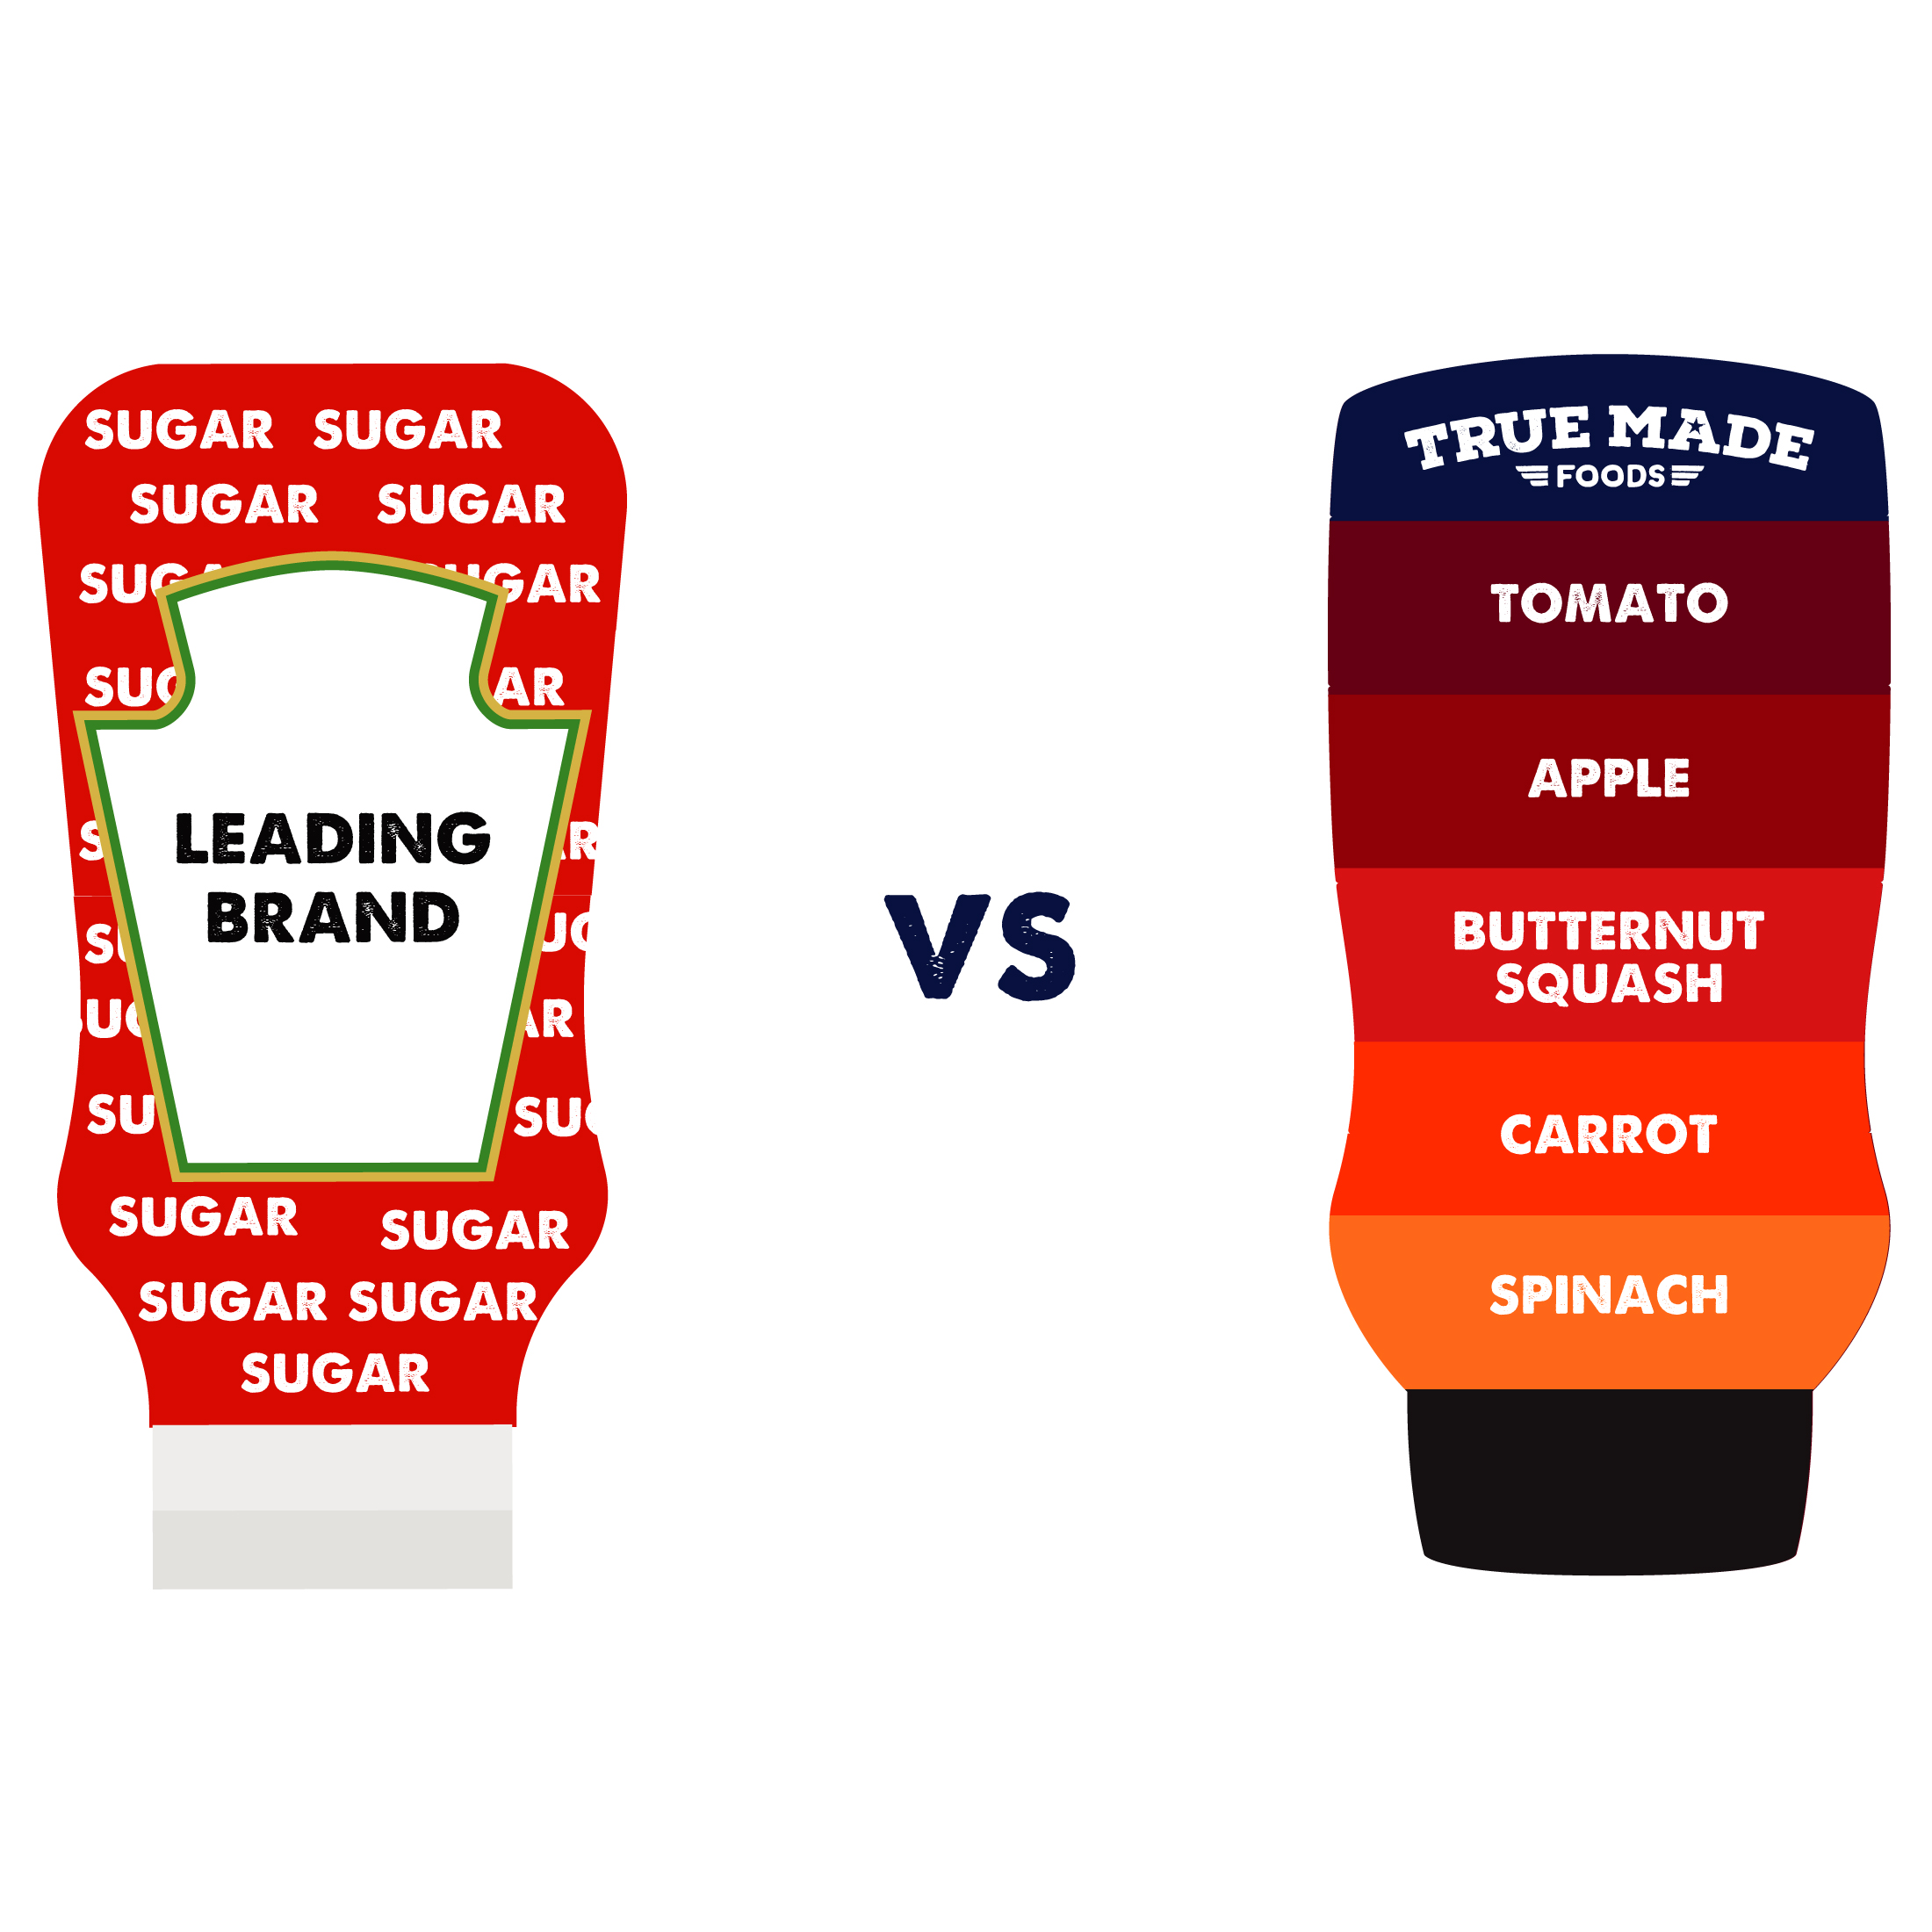 True Made Foods Less Sugar Low Sugar Vegetable Ketchup, 17 oz - image 5 of 7